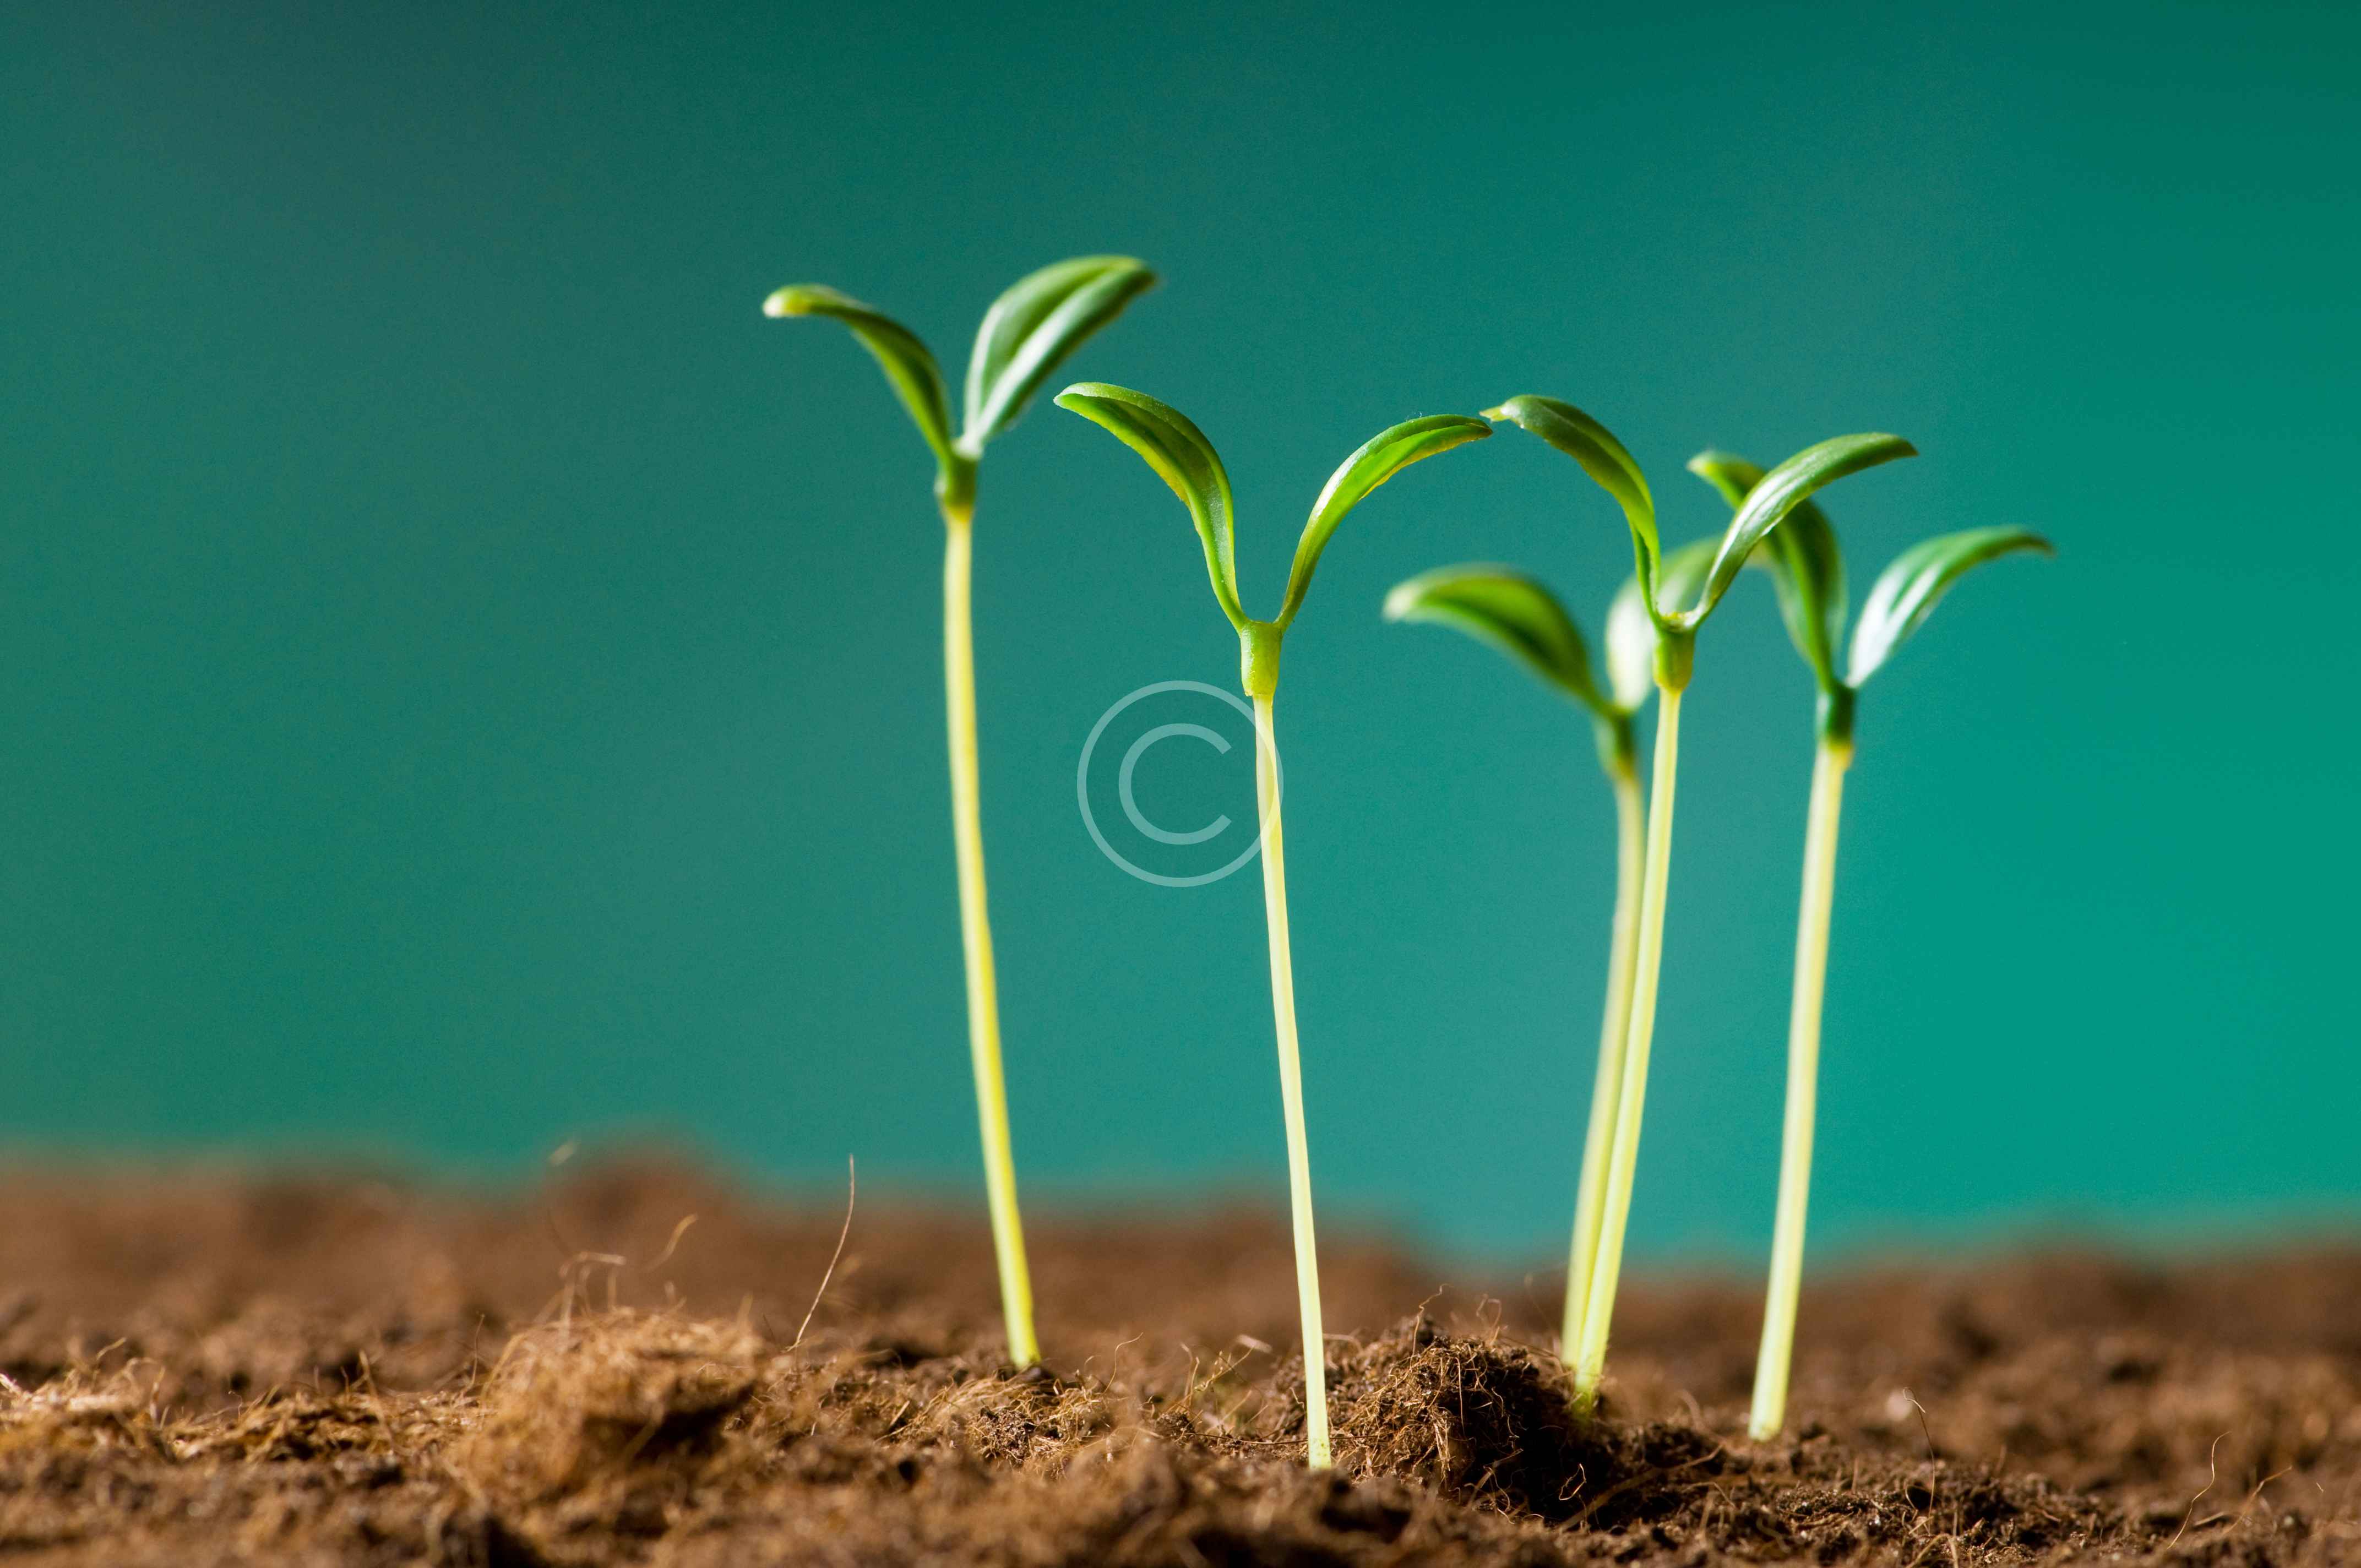 bigstock-Green-seedling-illustrating-co-14319230-2